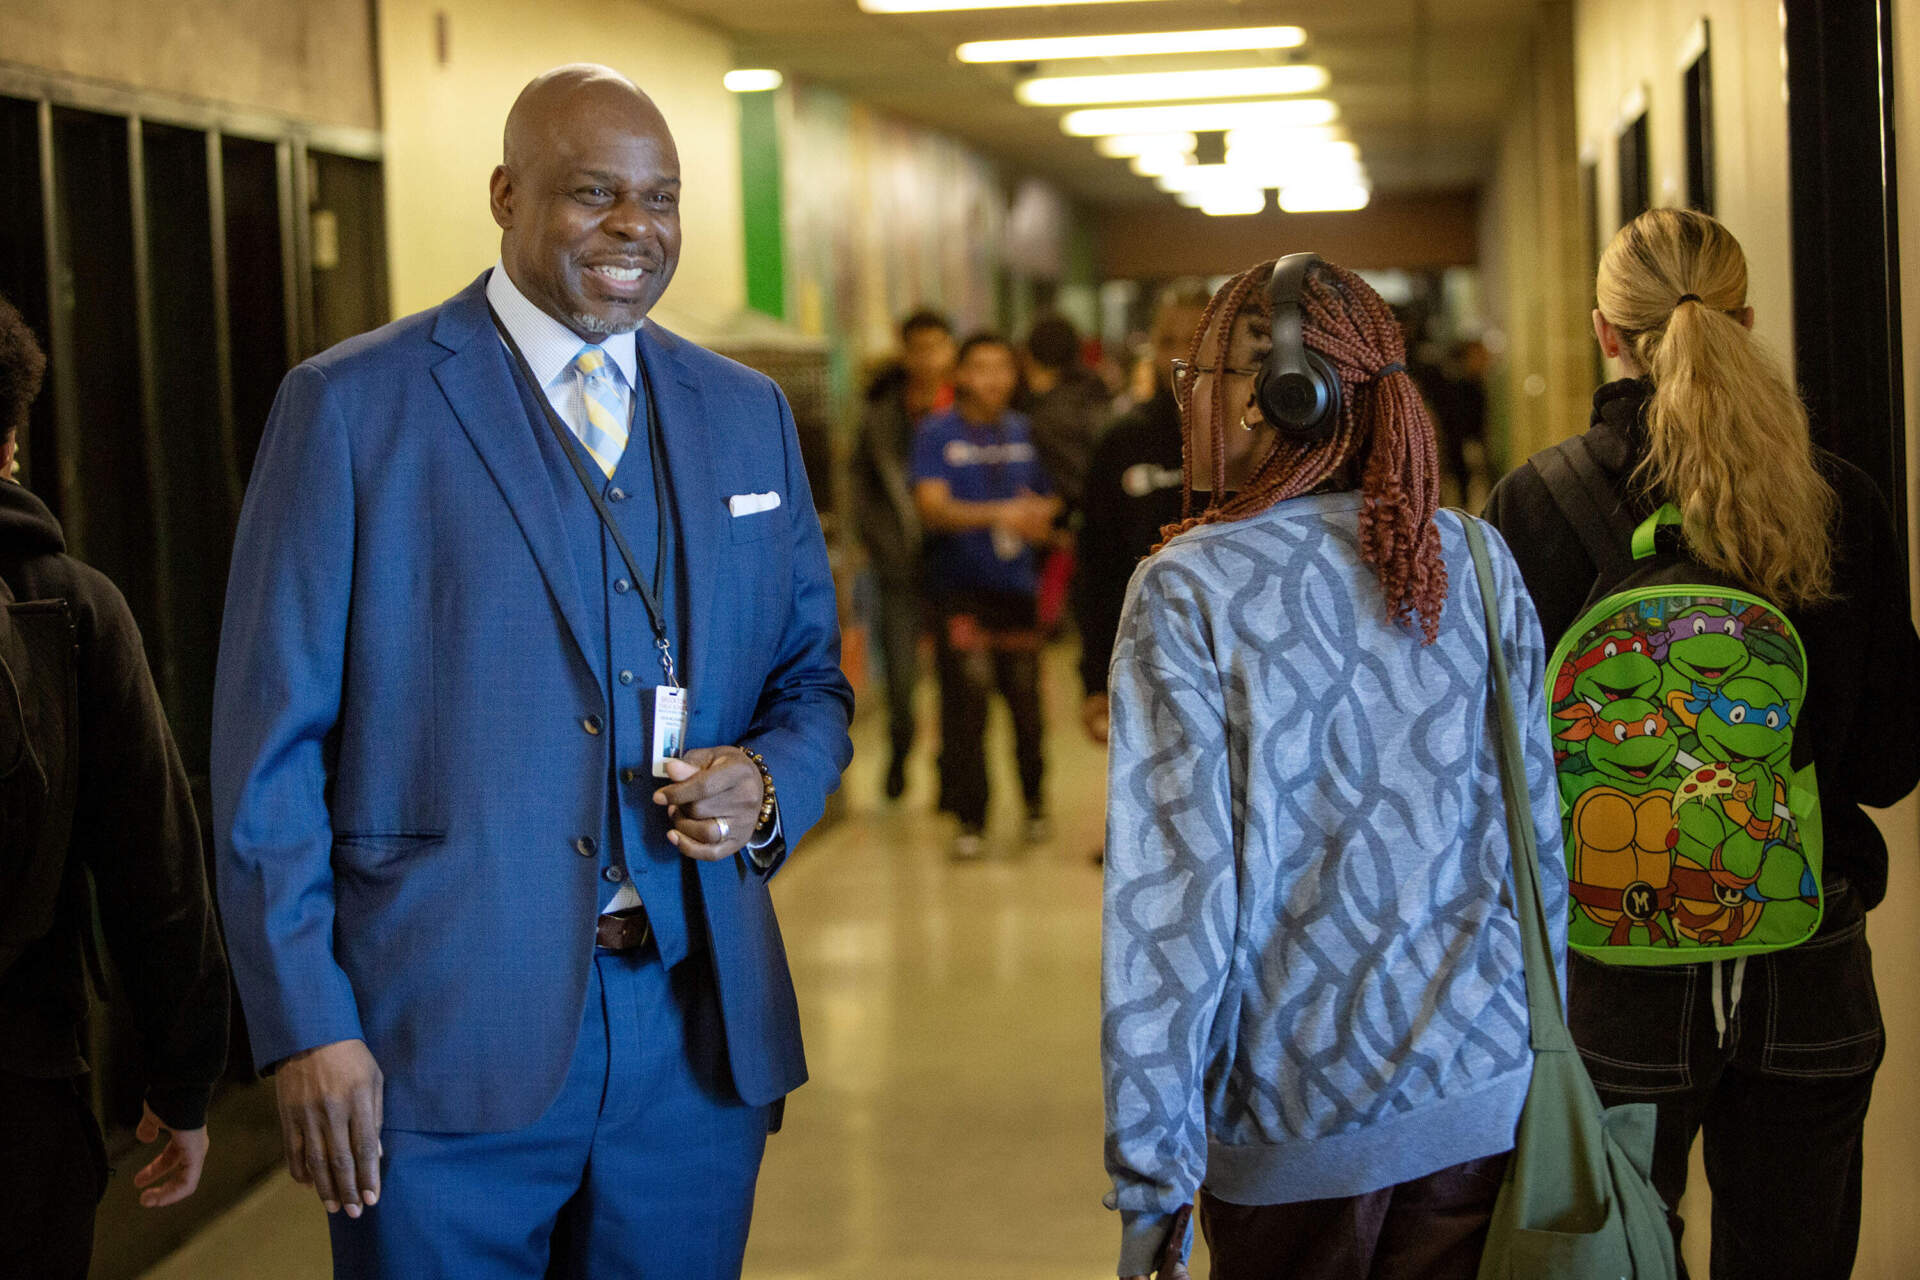 Principal Kevin McCaskill talks with students walking the hallways between classes. (Robin Lubbock/WBUR)